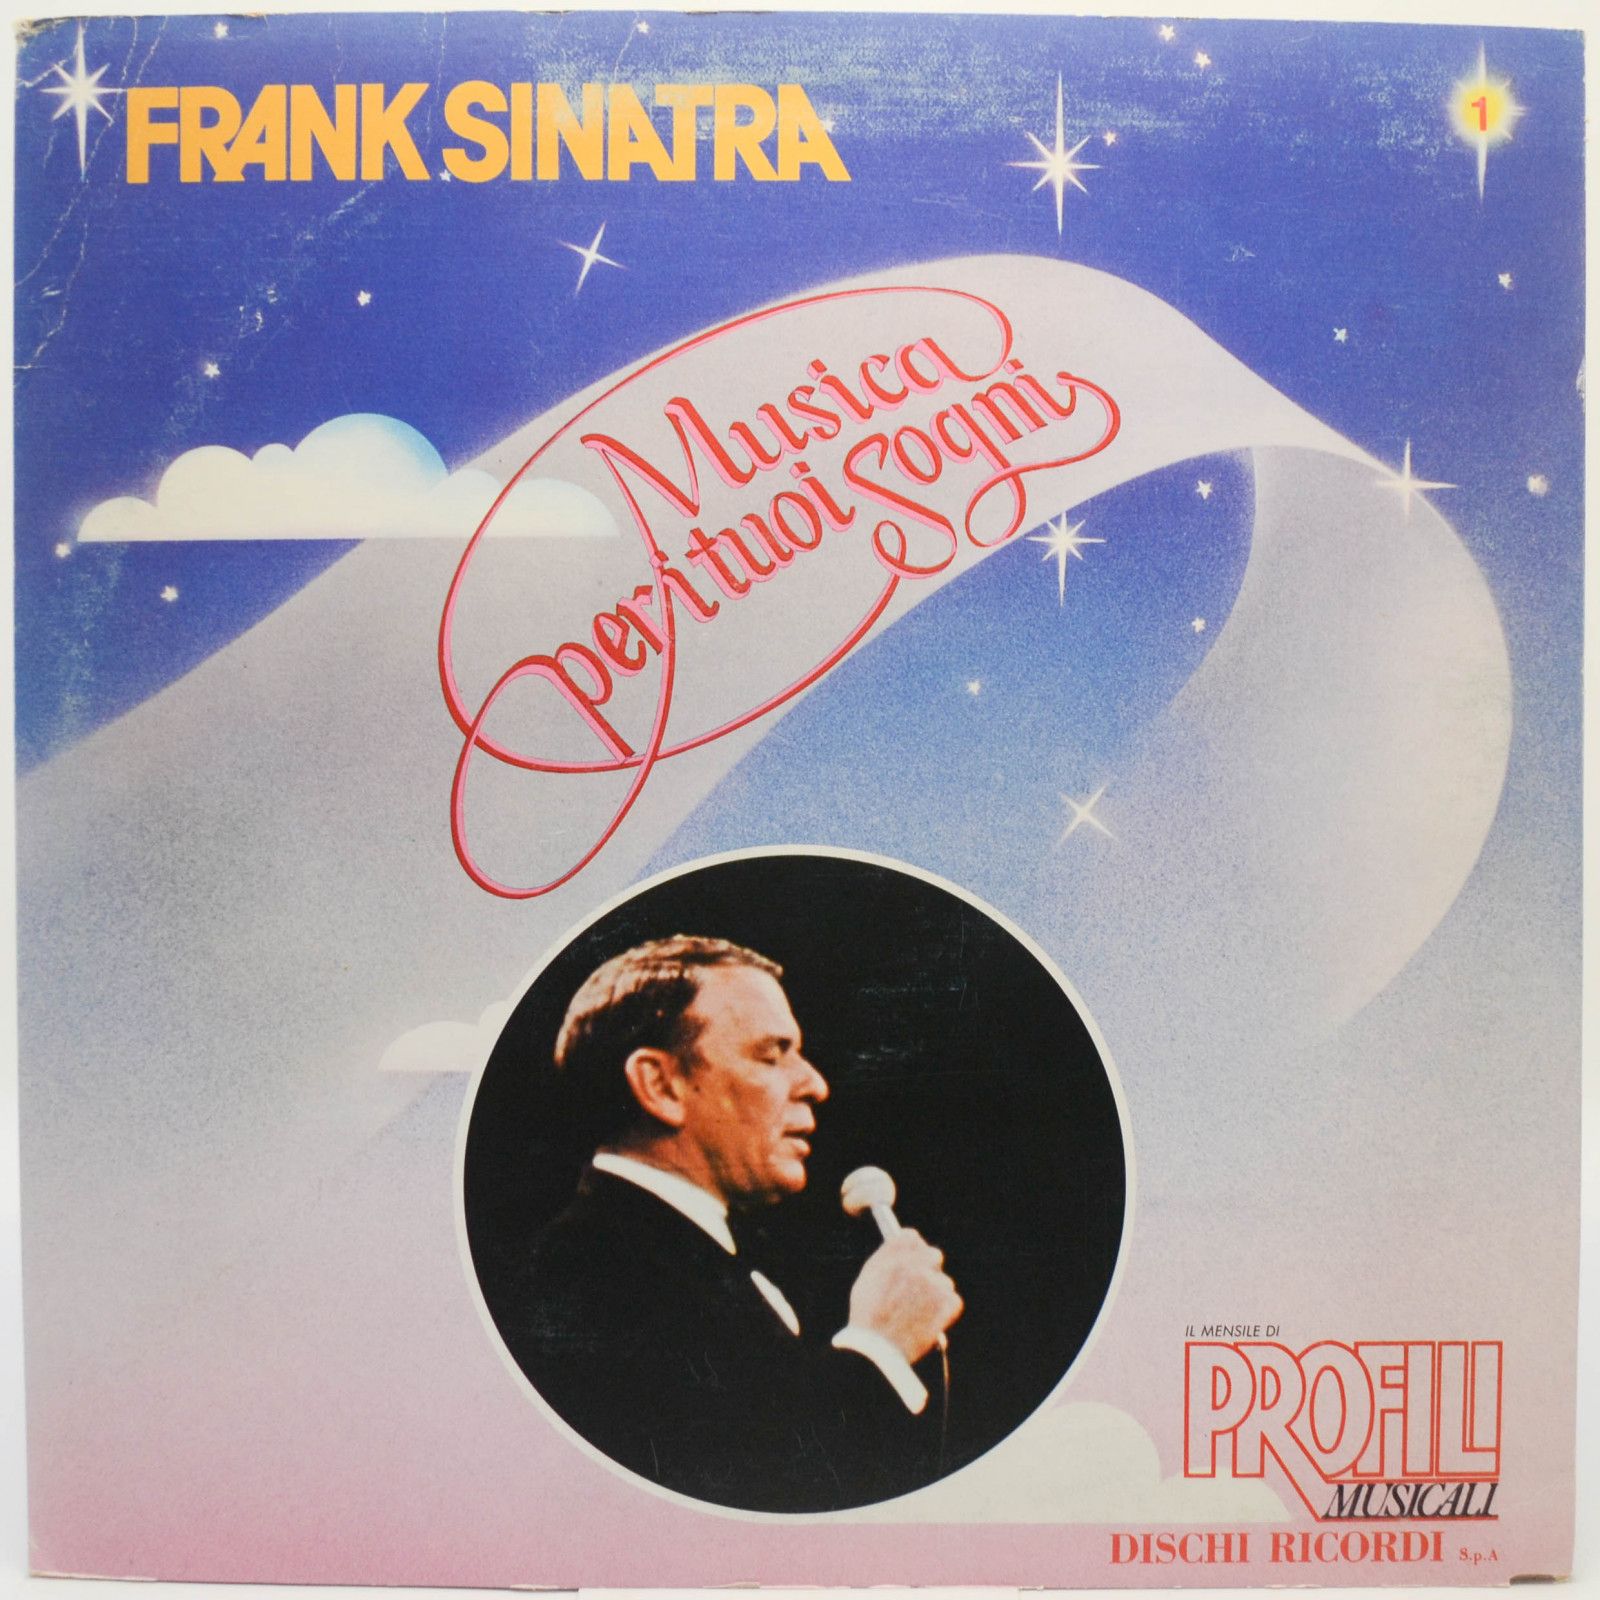 Frank Sinatra — Frank Sinatra, 1982